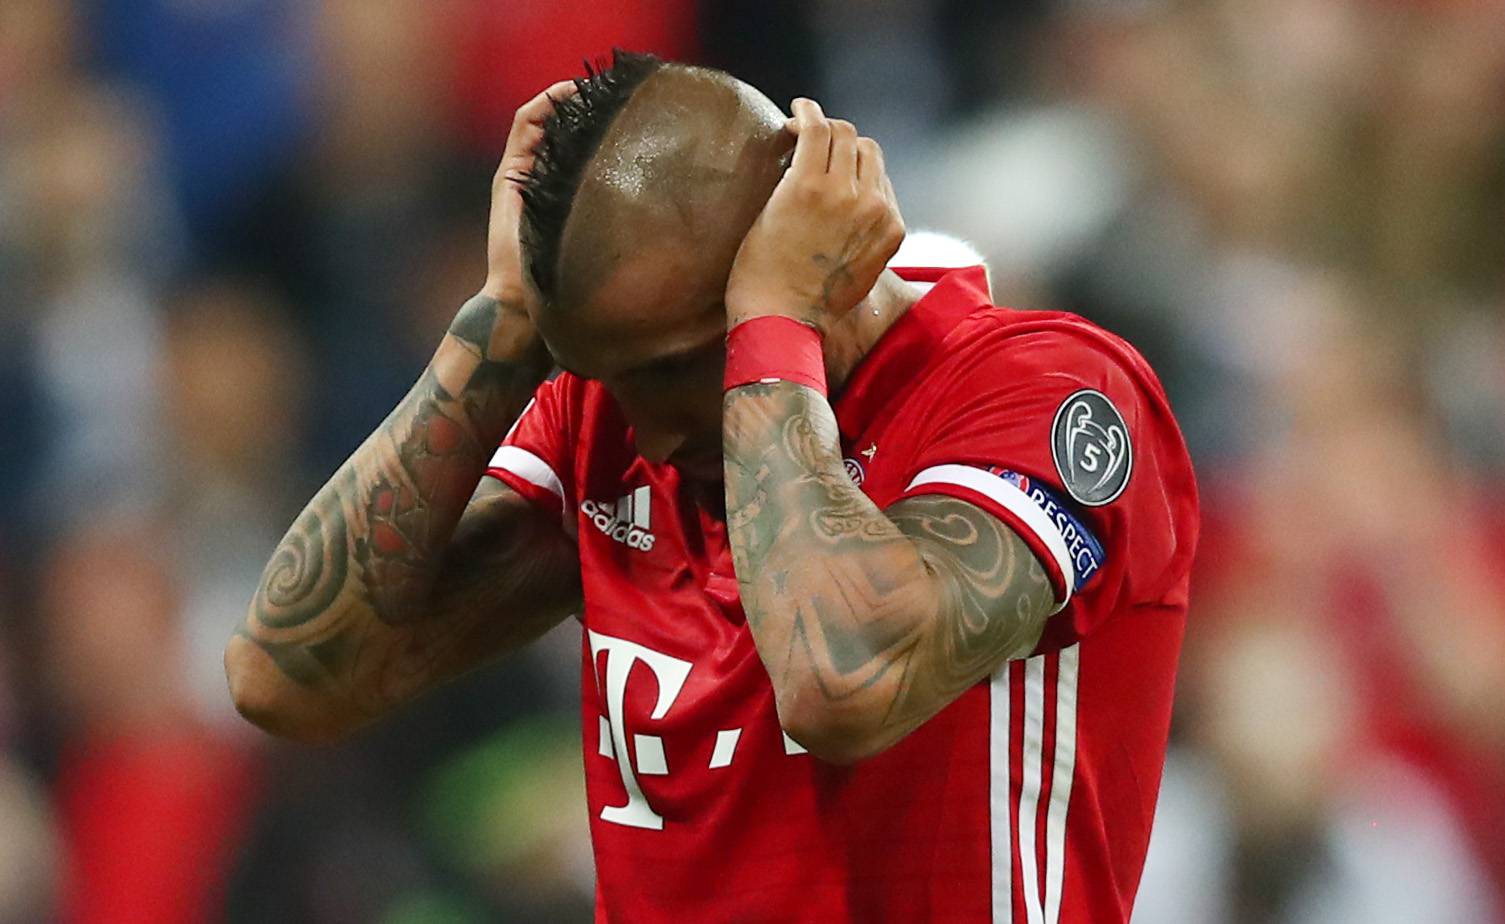 Bayern Munich's Arturo Vidal looks dejected after missing a penalty